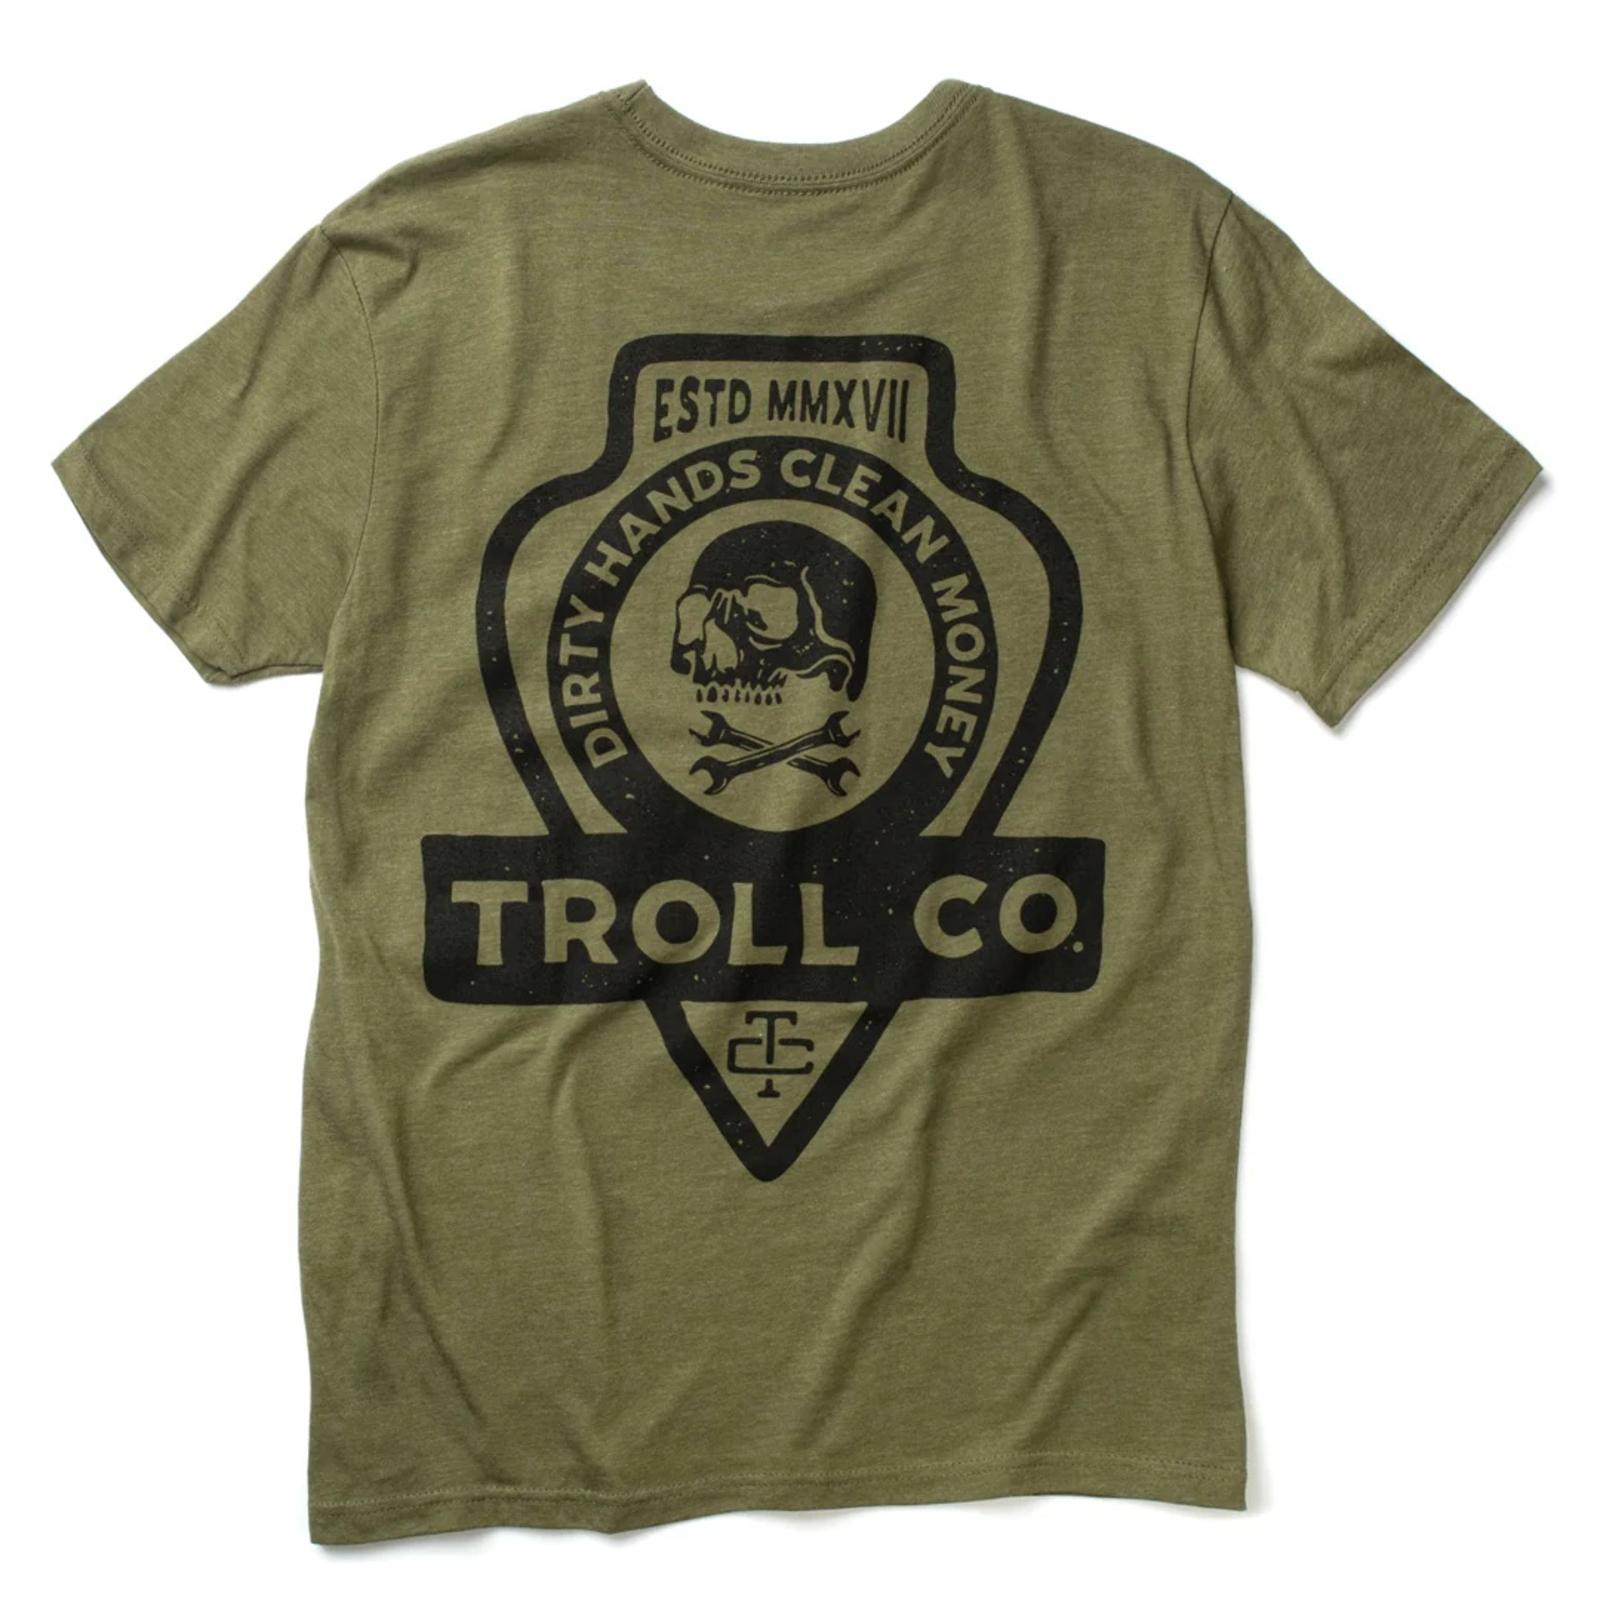 Troll Clothing Co. Artifact Tee BACK VIEW